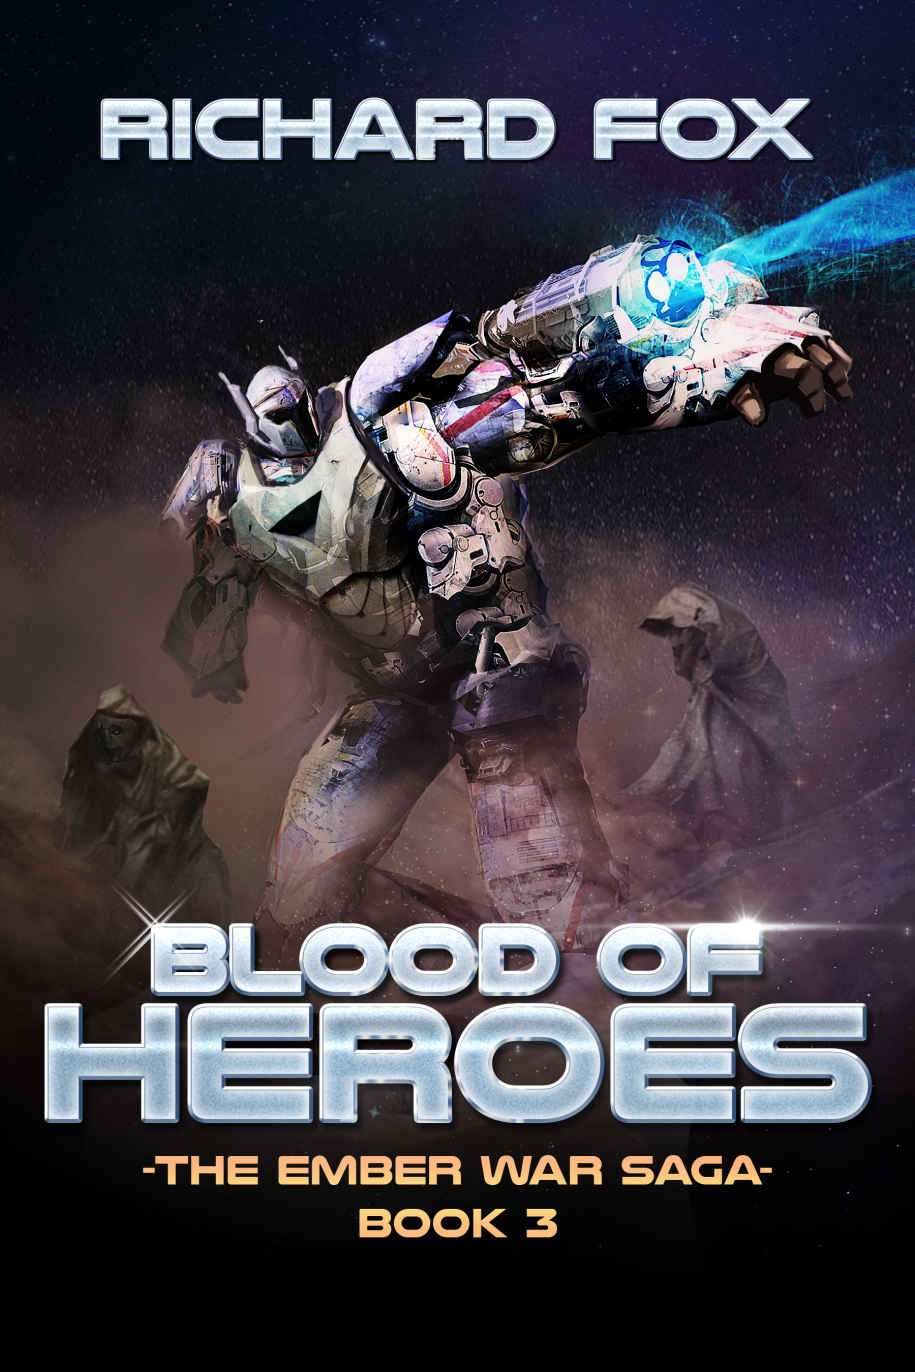 Blood of Heroes (The Ember War Saga Book 3) by Richard Fox